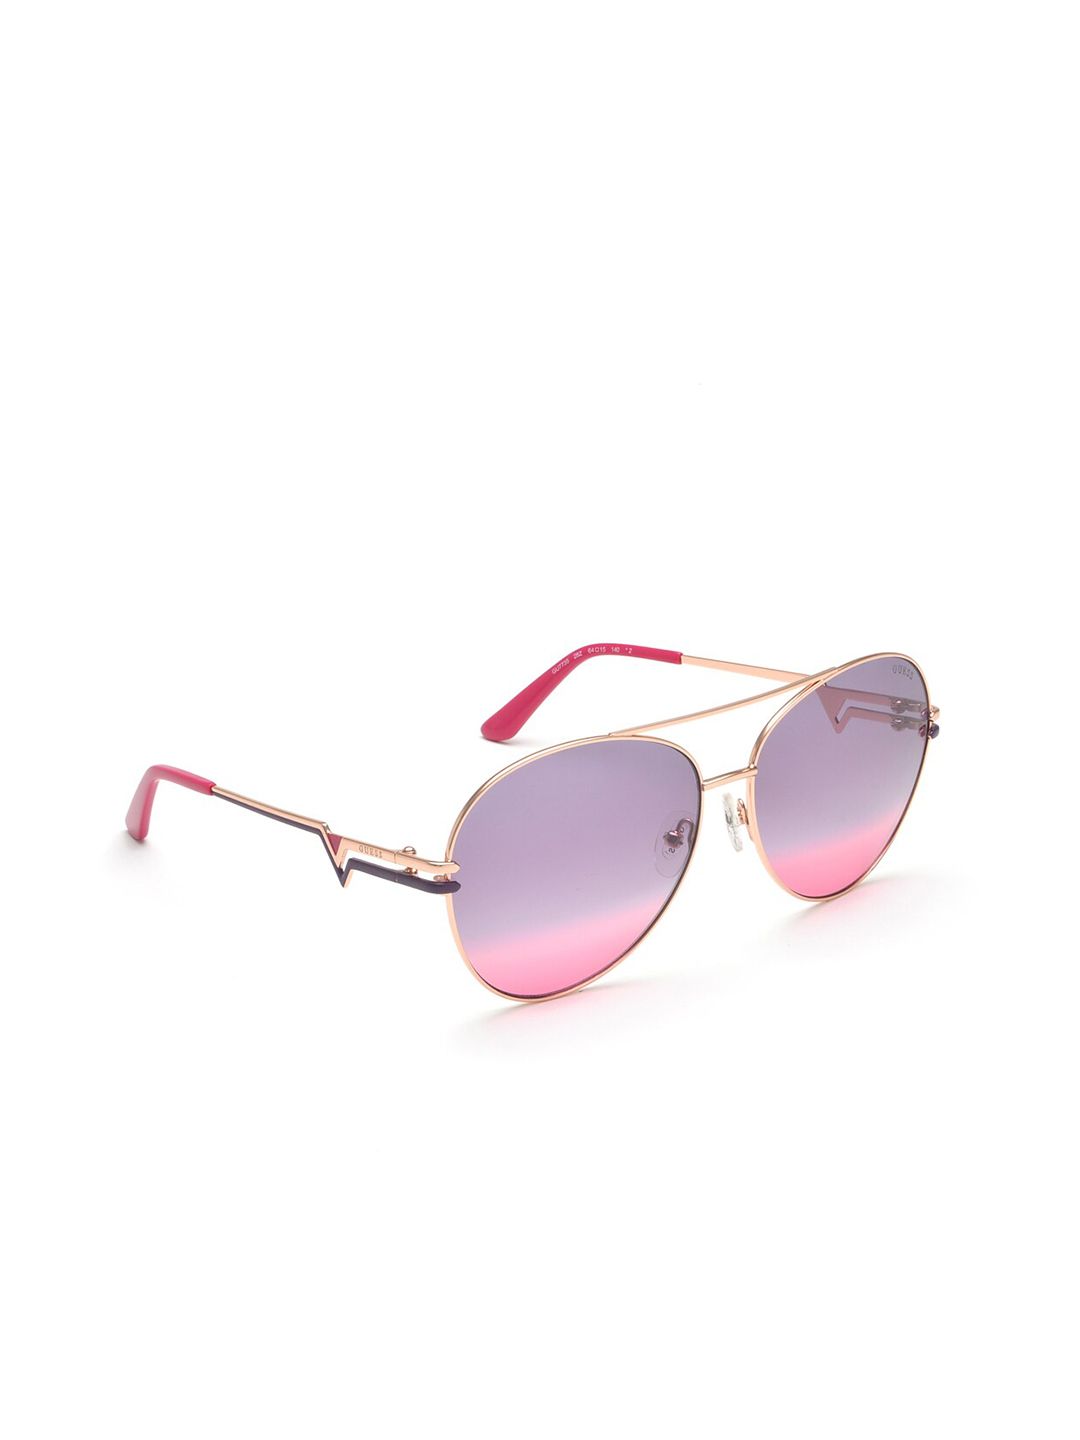 GUESS Women Pink Lens & Gold-Toned Full Rim Aviator Sunglasses Price in India